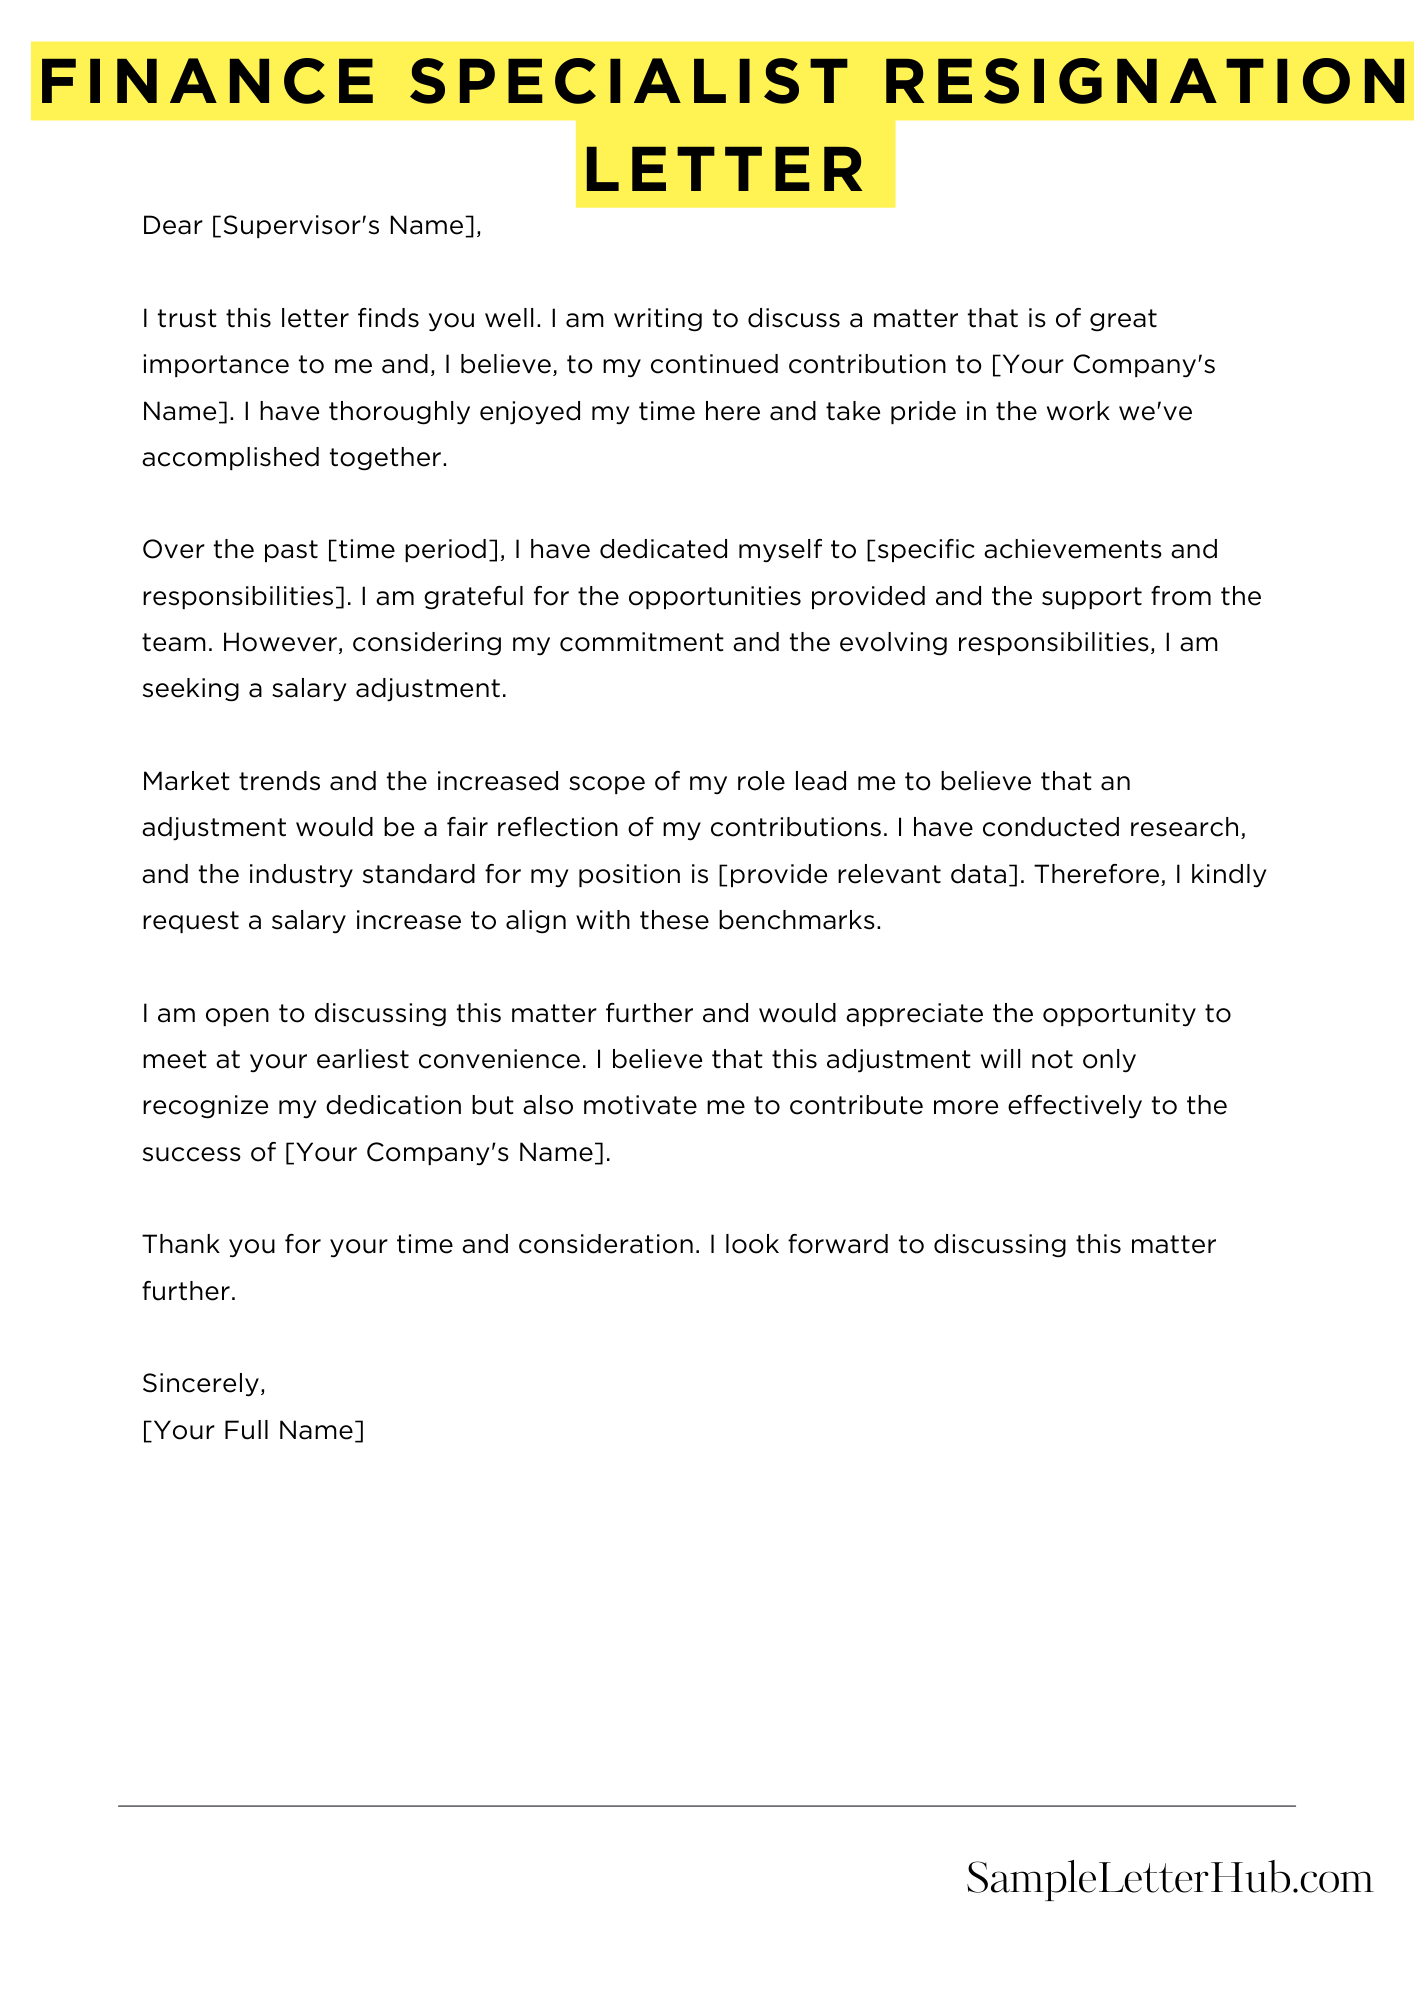 Finance Specialist Resignation Letter 